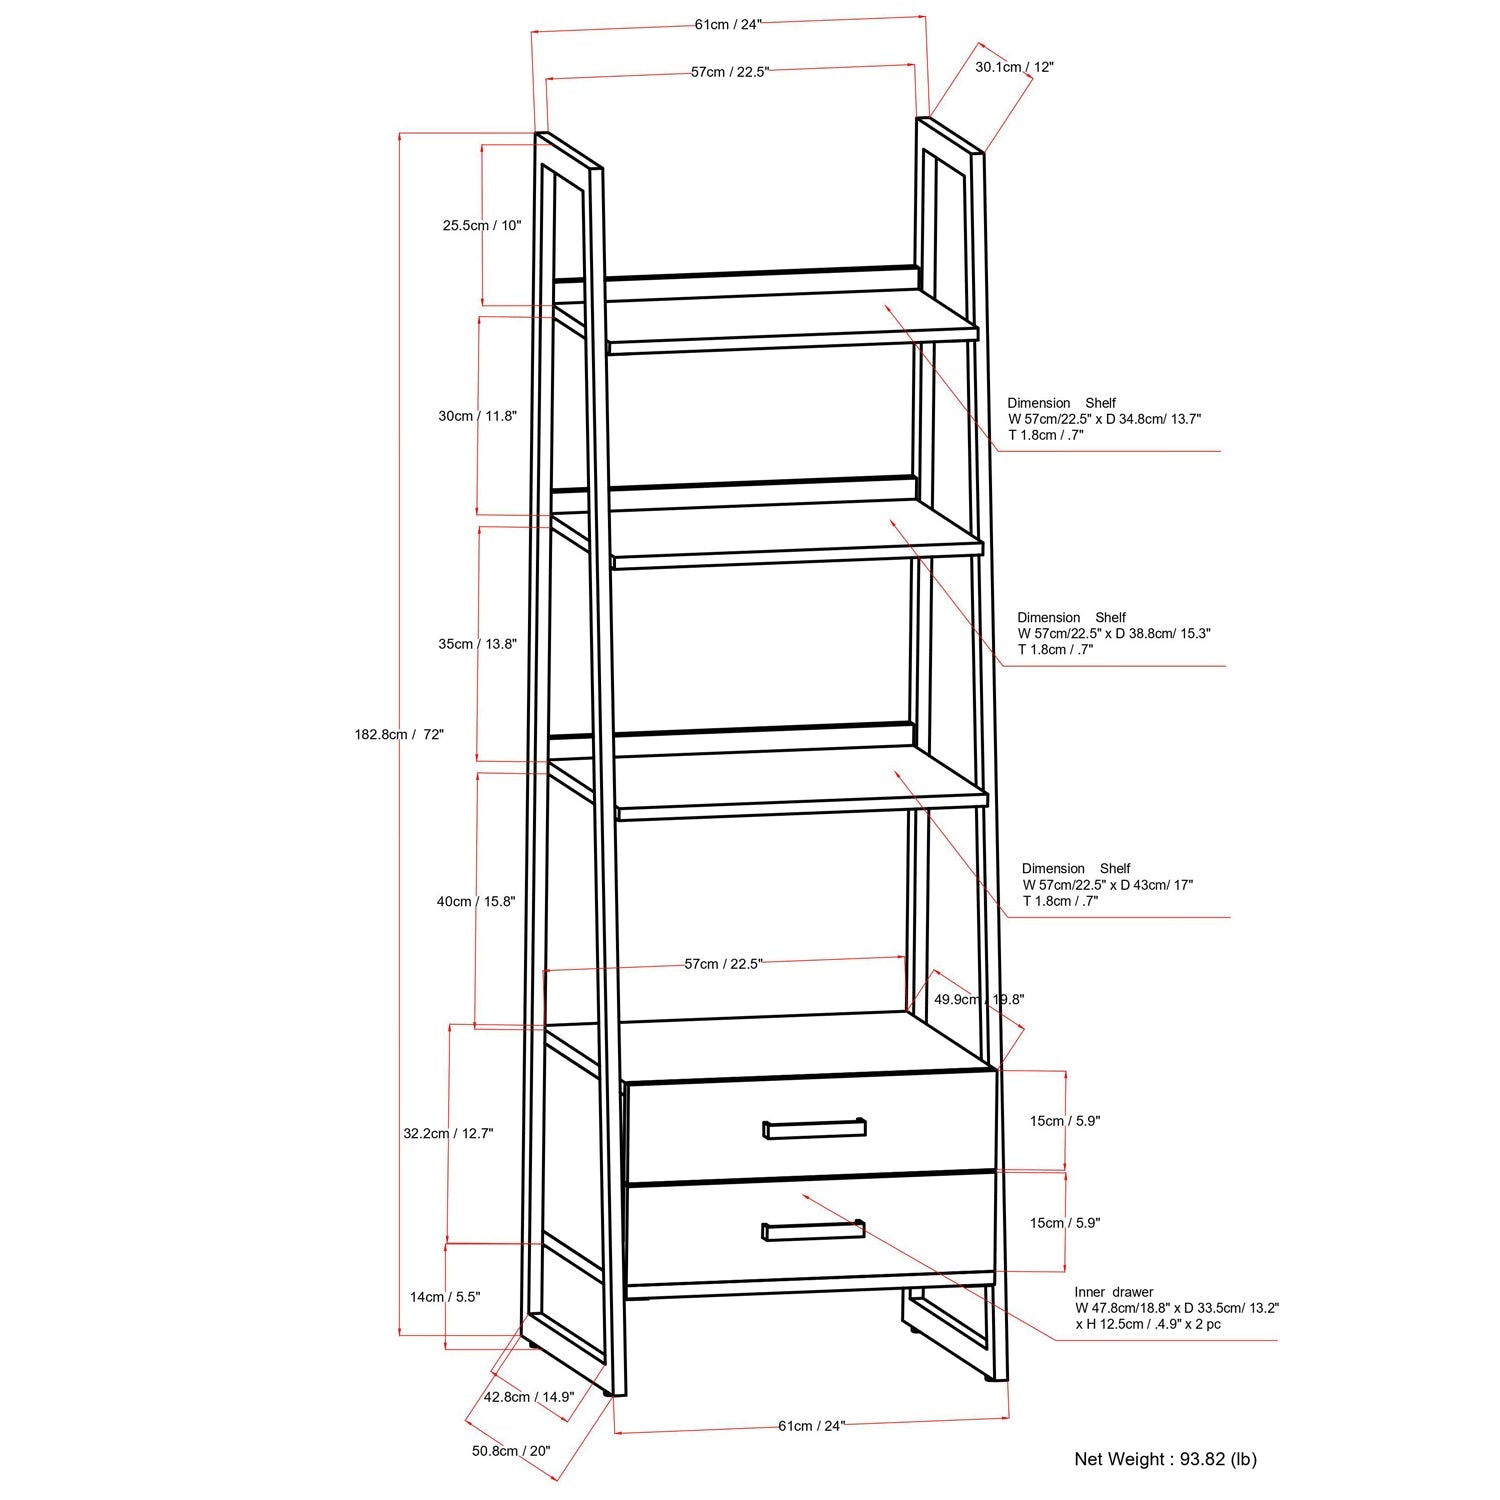 Sawhorse Metal/Wood Ladder Shelf with Storage